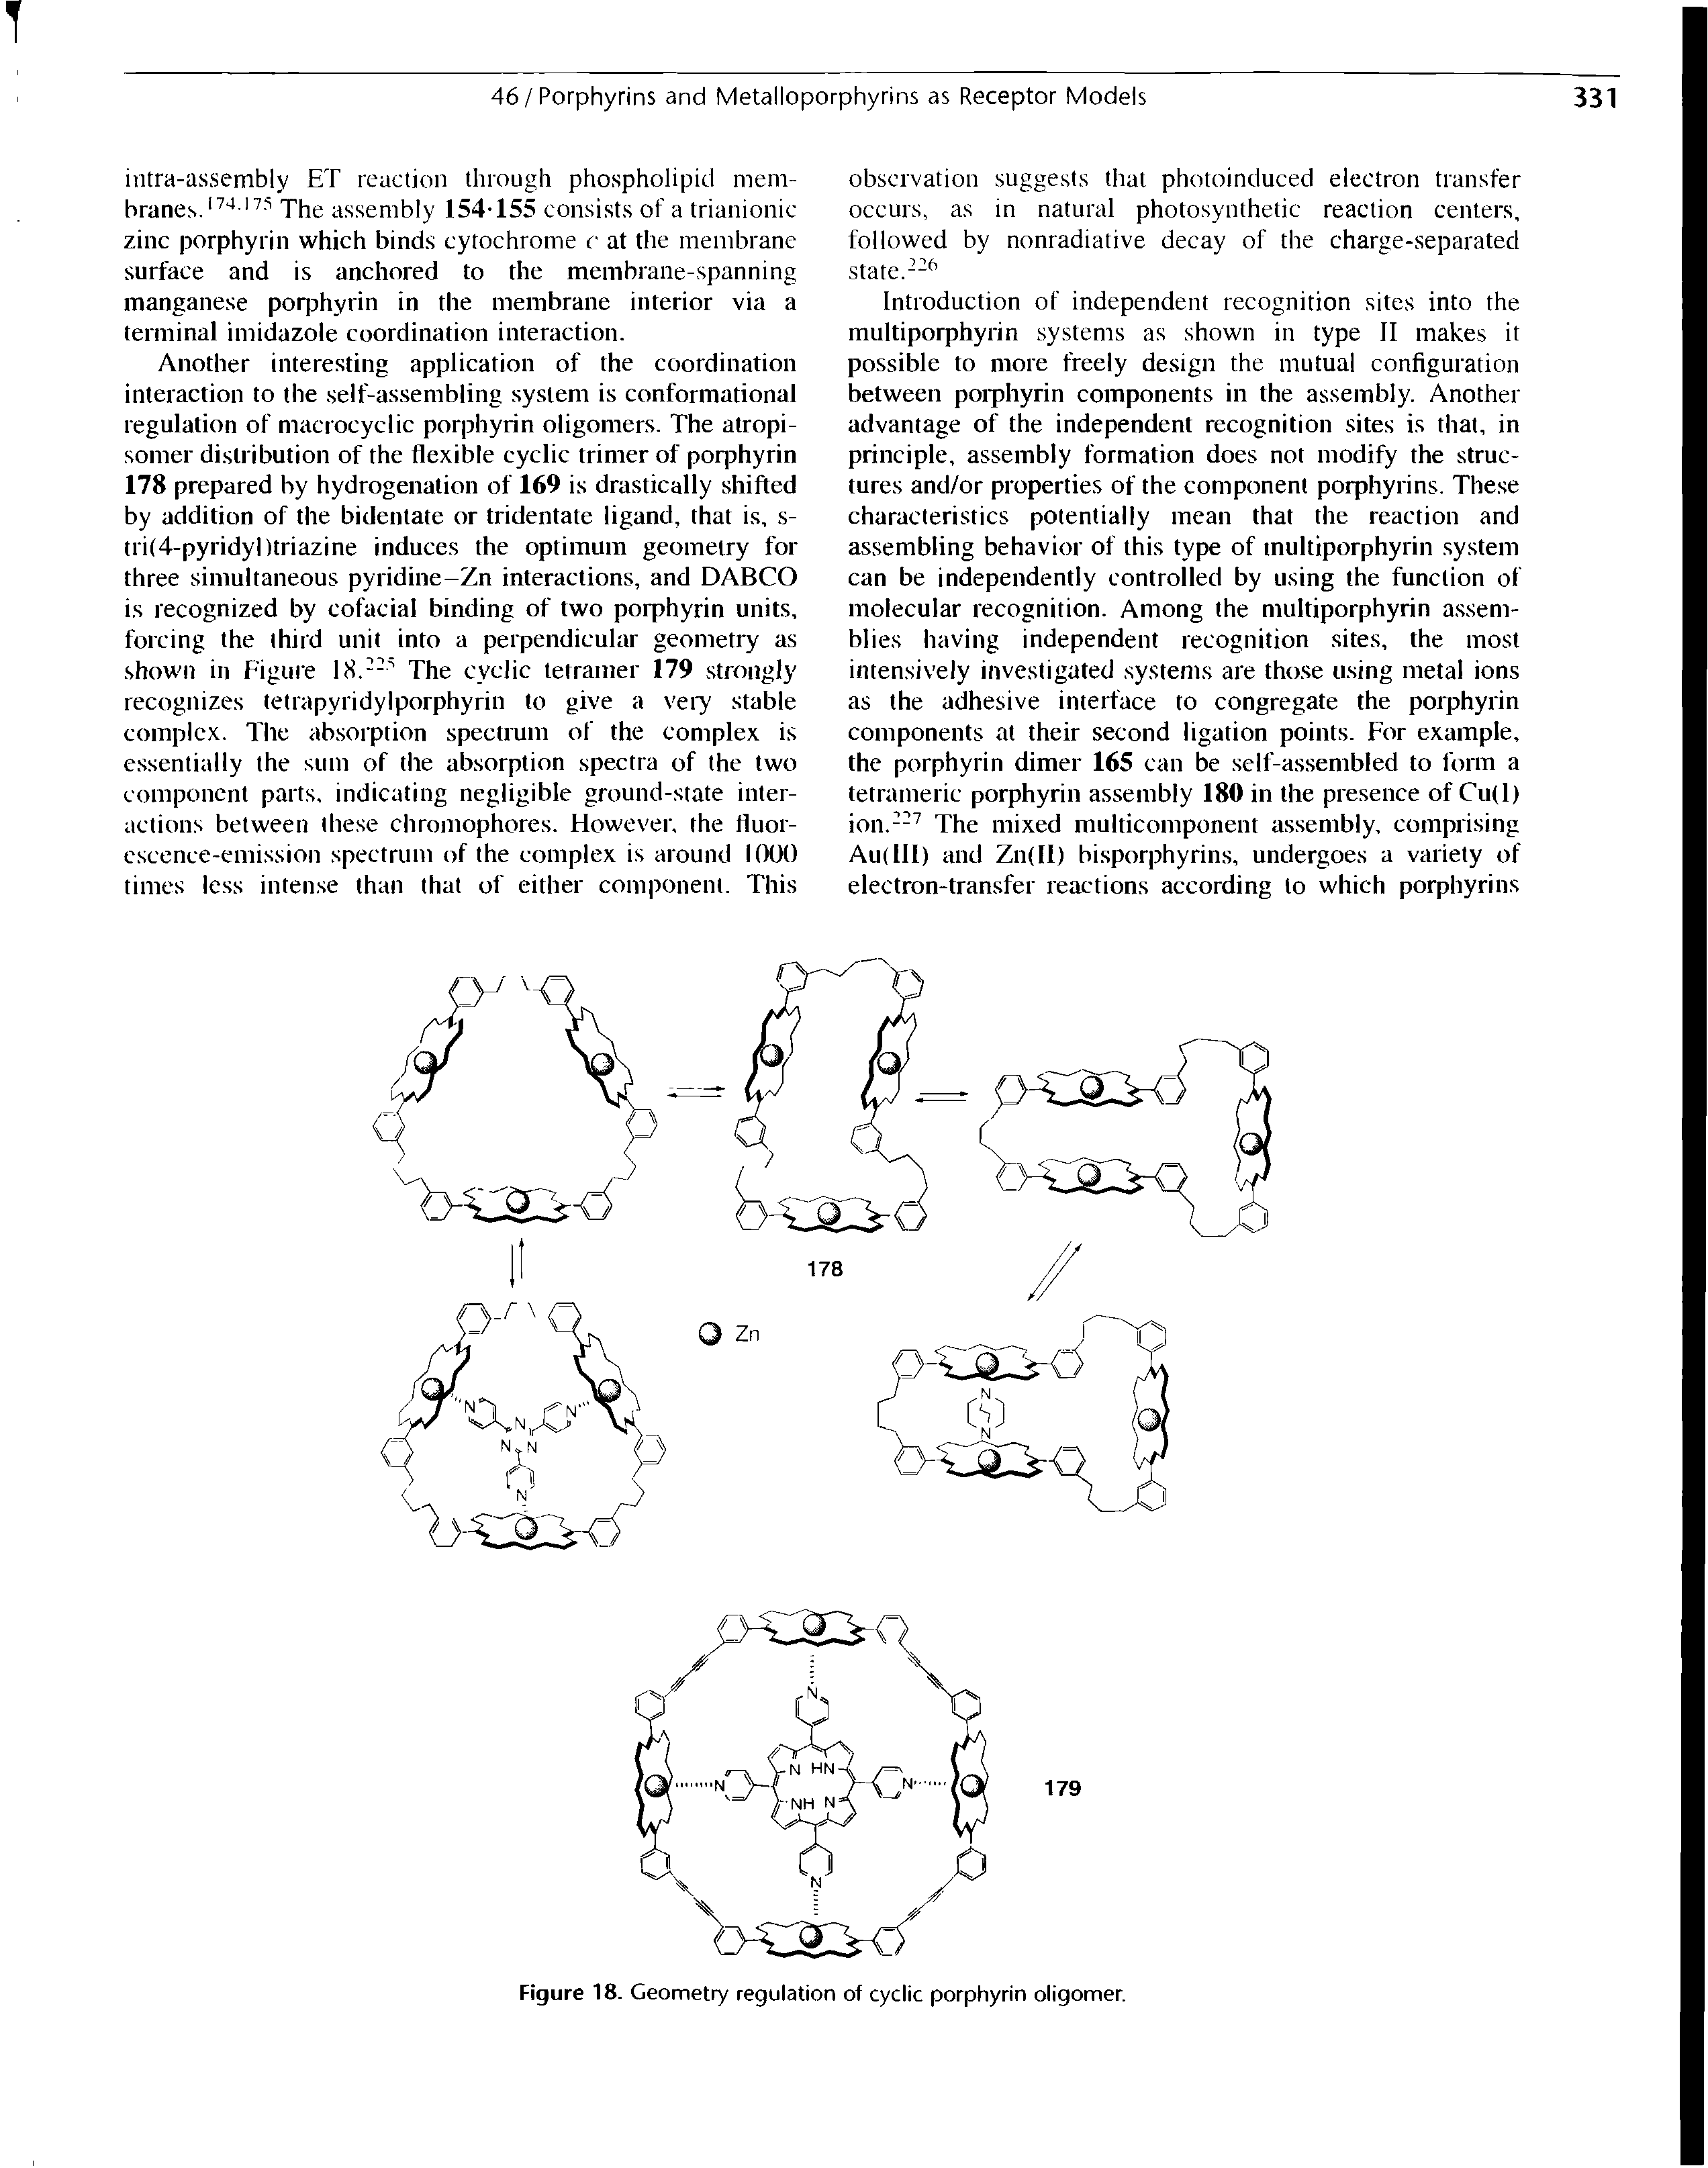 Figure 18. Geometry regulation of cyclic porphyrin oligomer.